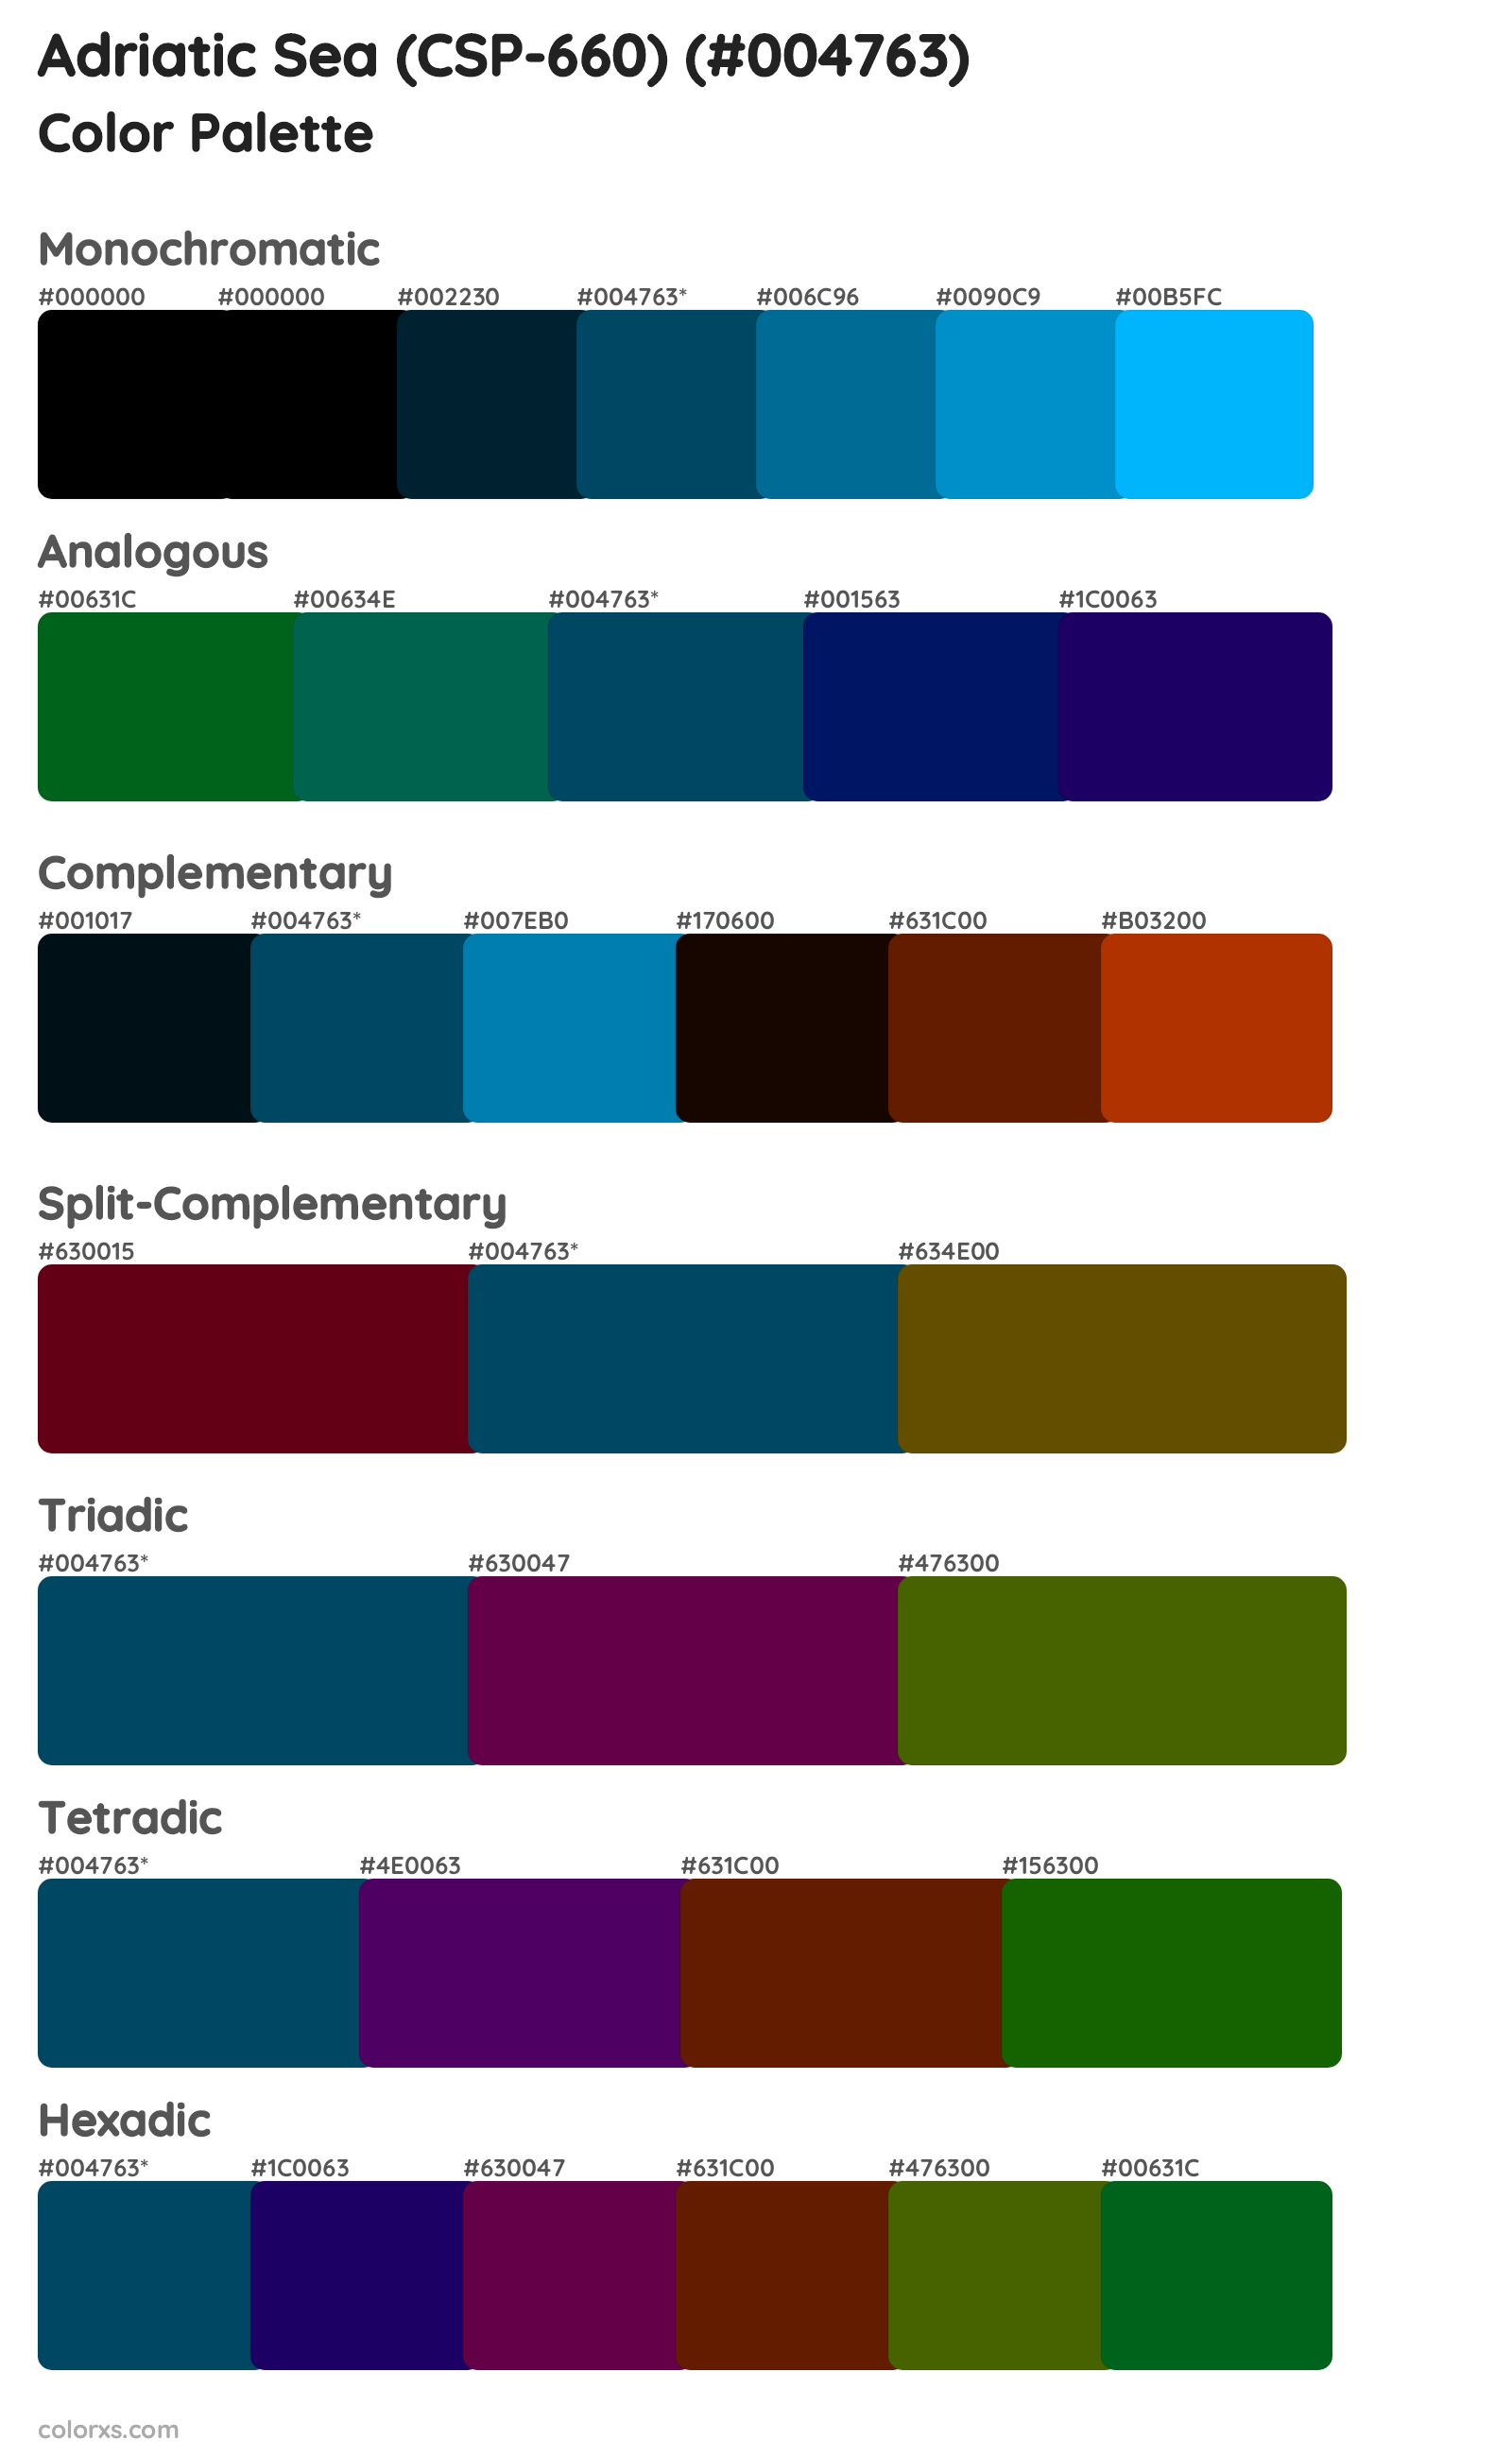 Adriatic Sea (CSP-660) Color Scheme Palettes